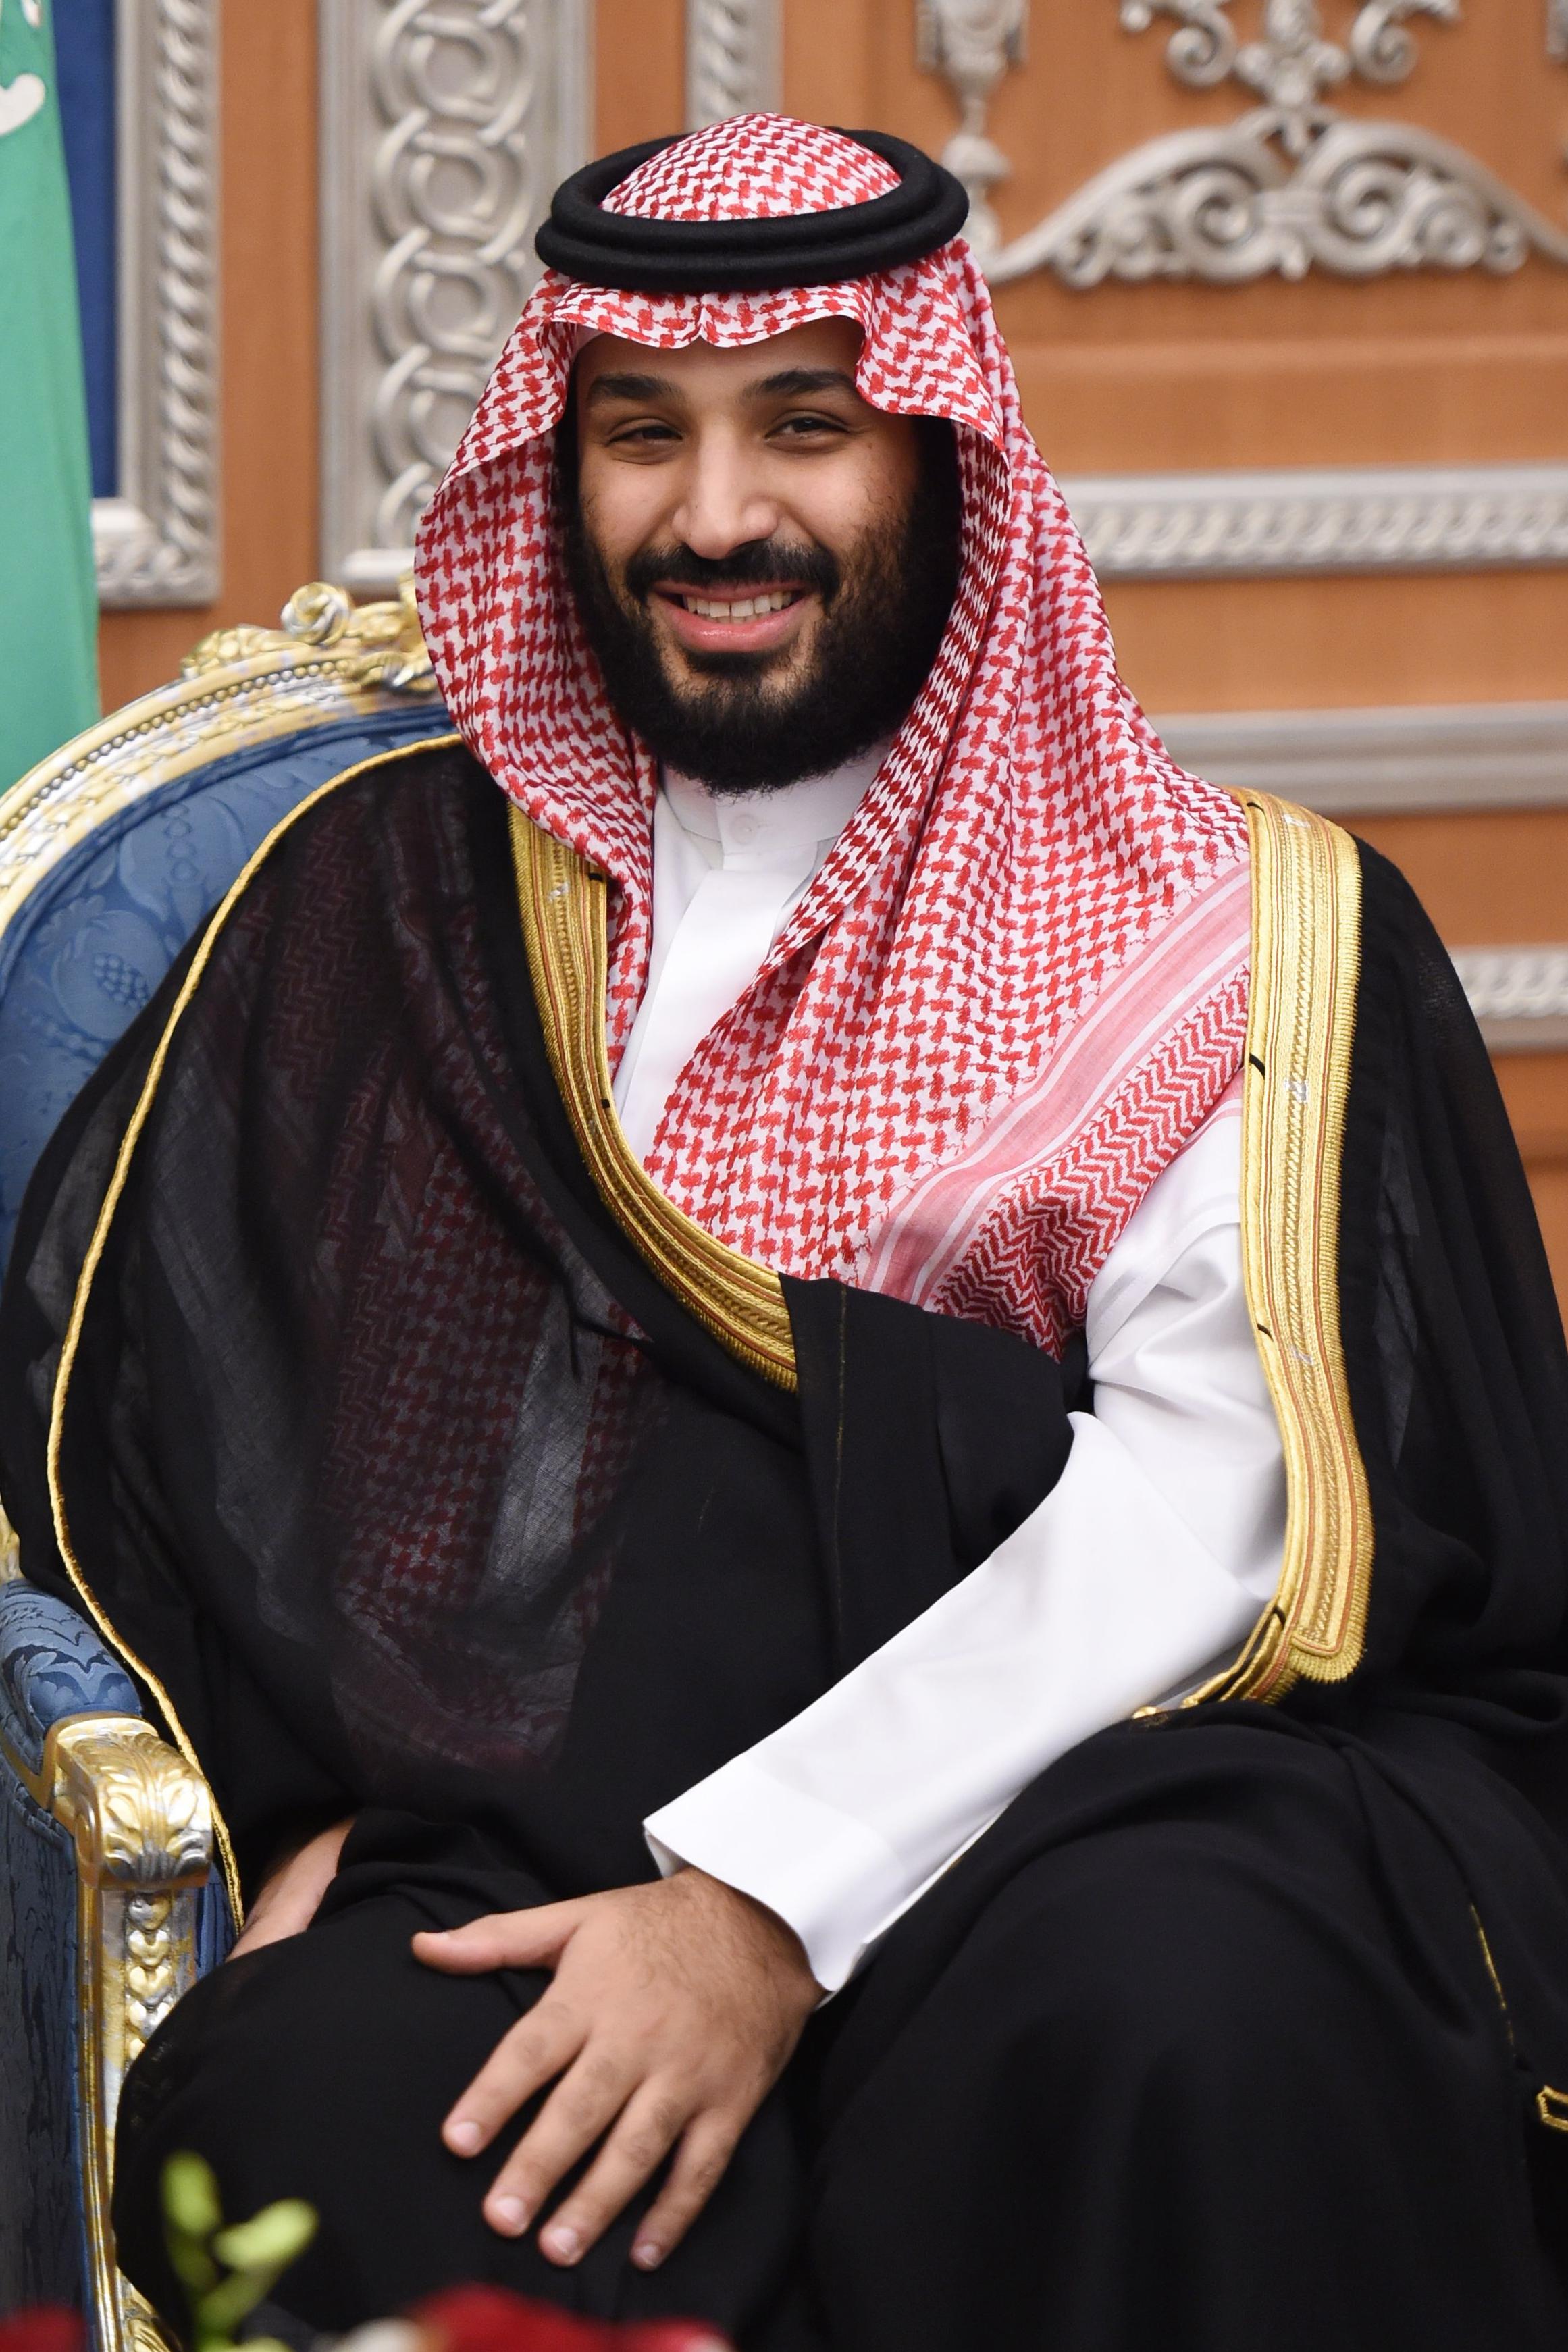 Stand aside for Mohammed bin Salman, Saudi Arabia's crown prince